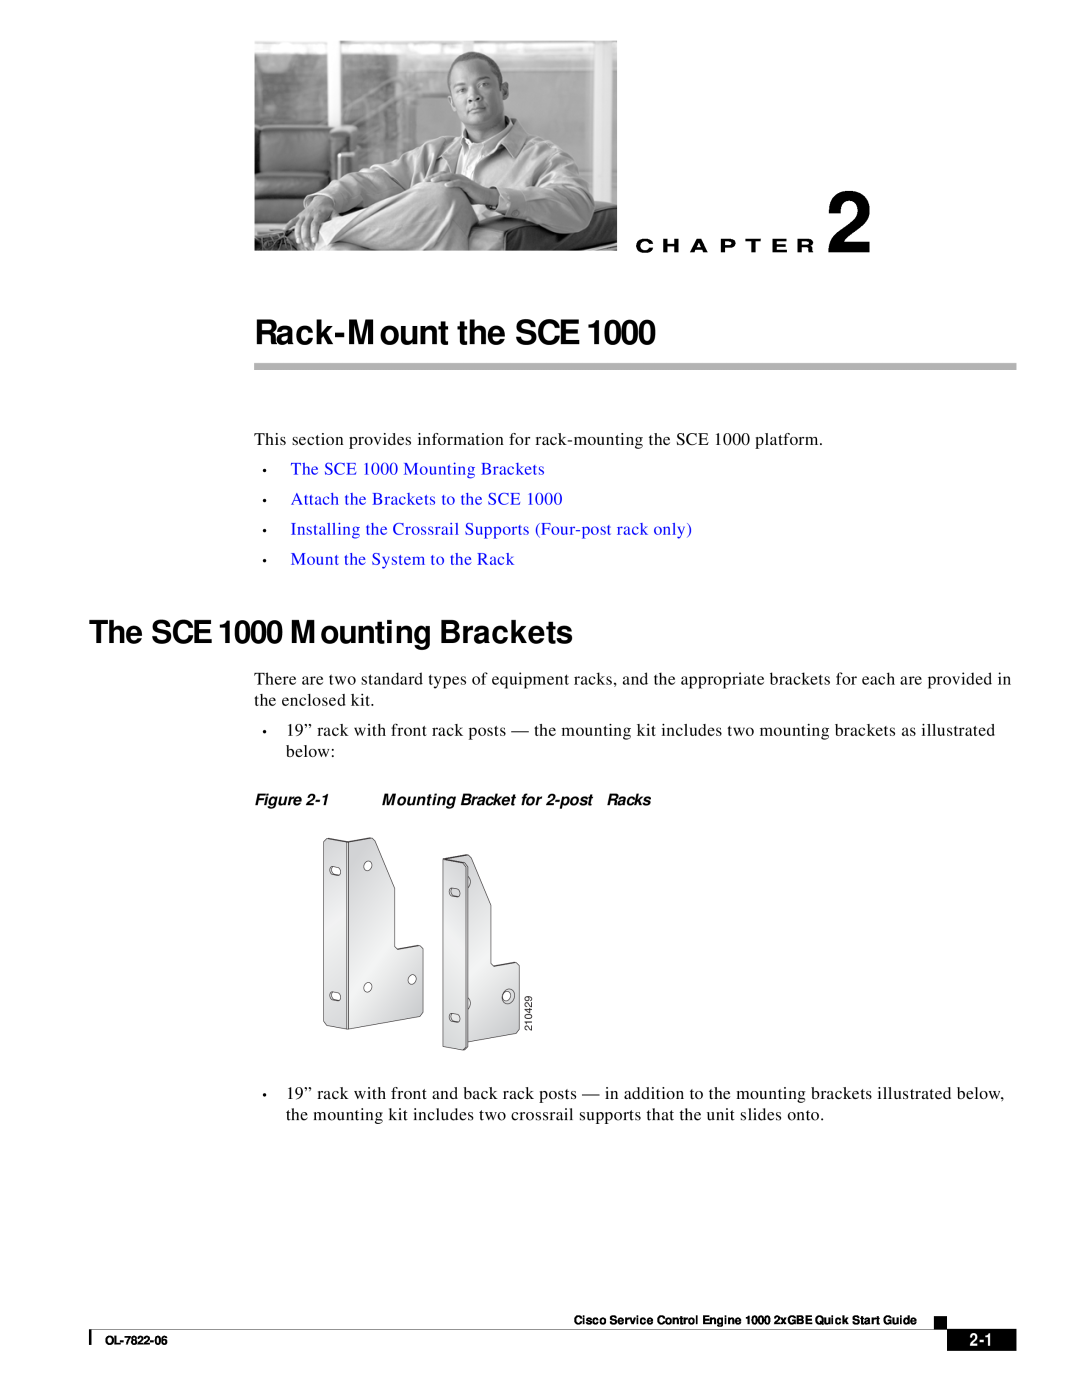 Cisco Systems OL-7822-06 Rack-Mount the SCE, The SCE 1000 Mounting Brackets, Mount the System to the Rack, C H A P T E R 